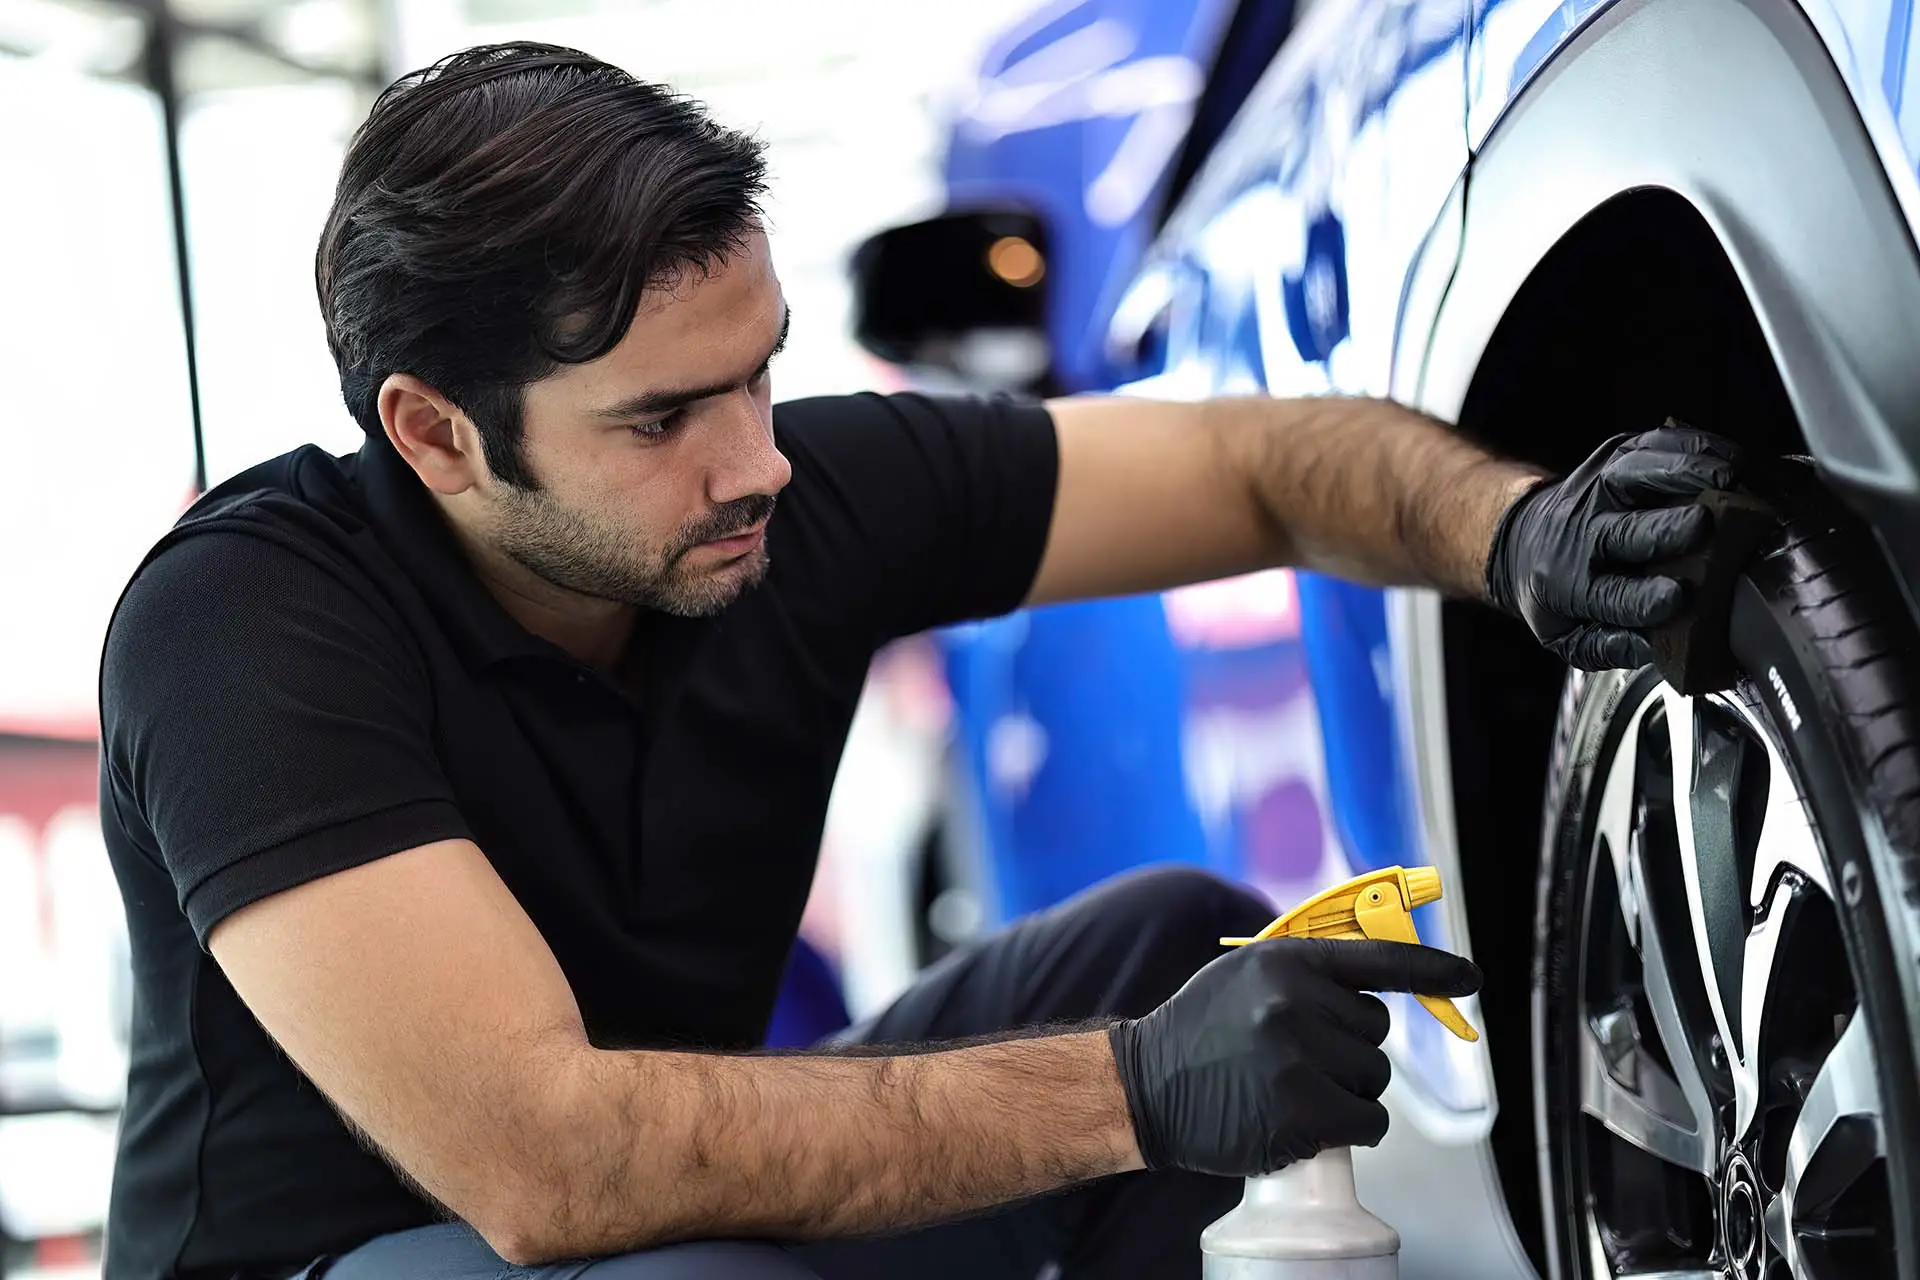 Car service worker polishing car wheels with microfiber cloth an